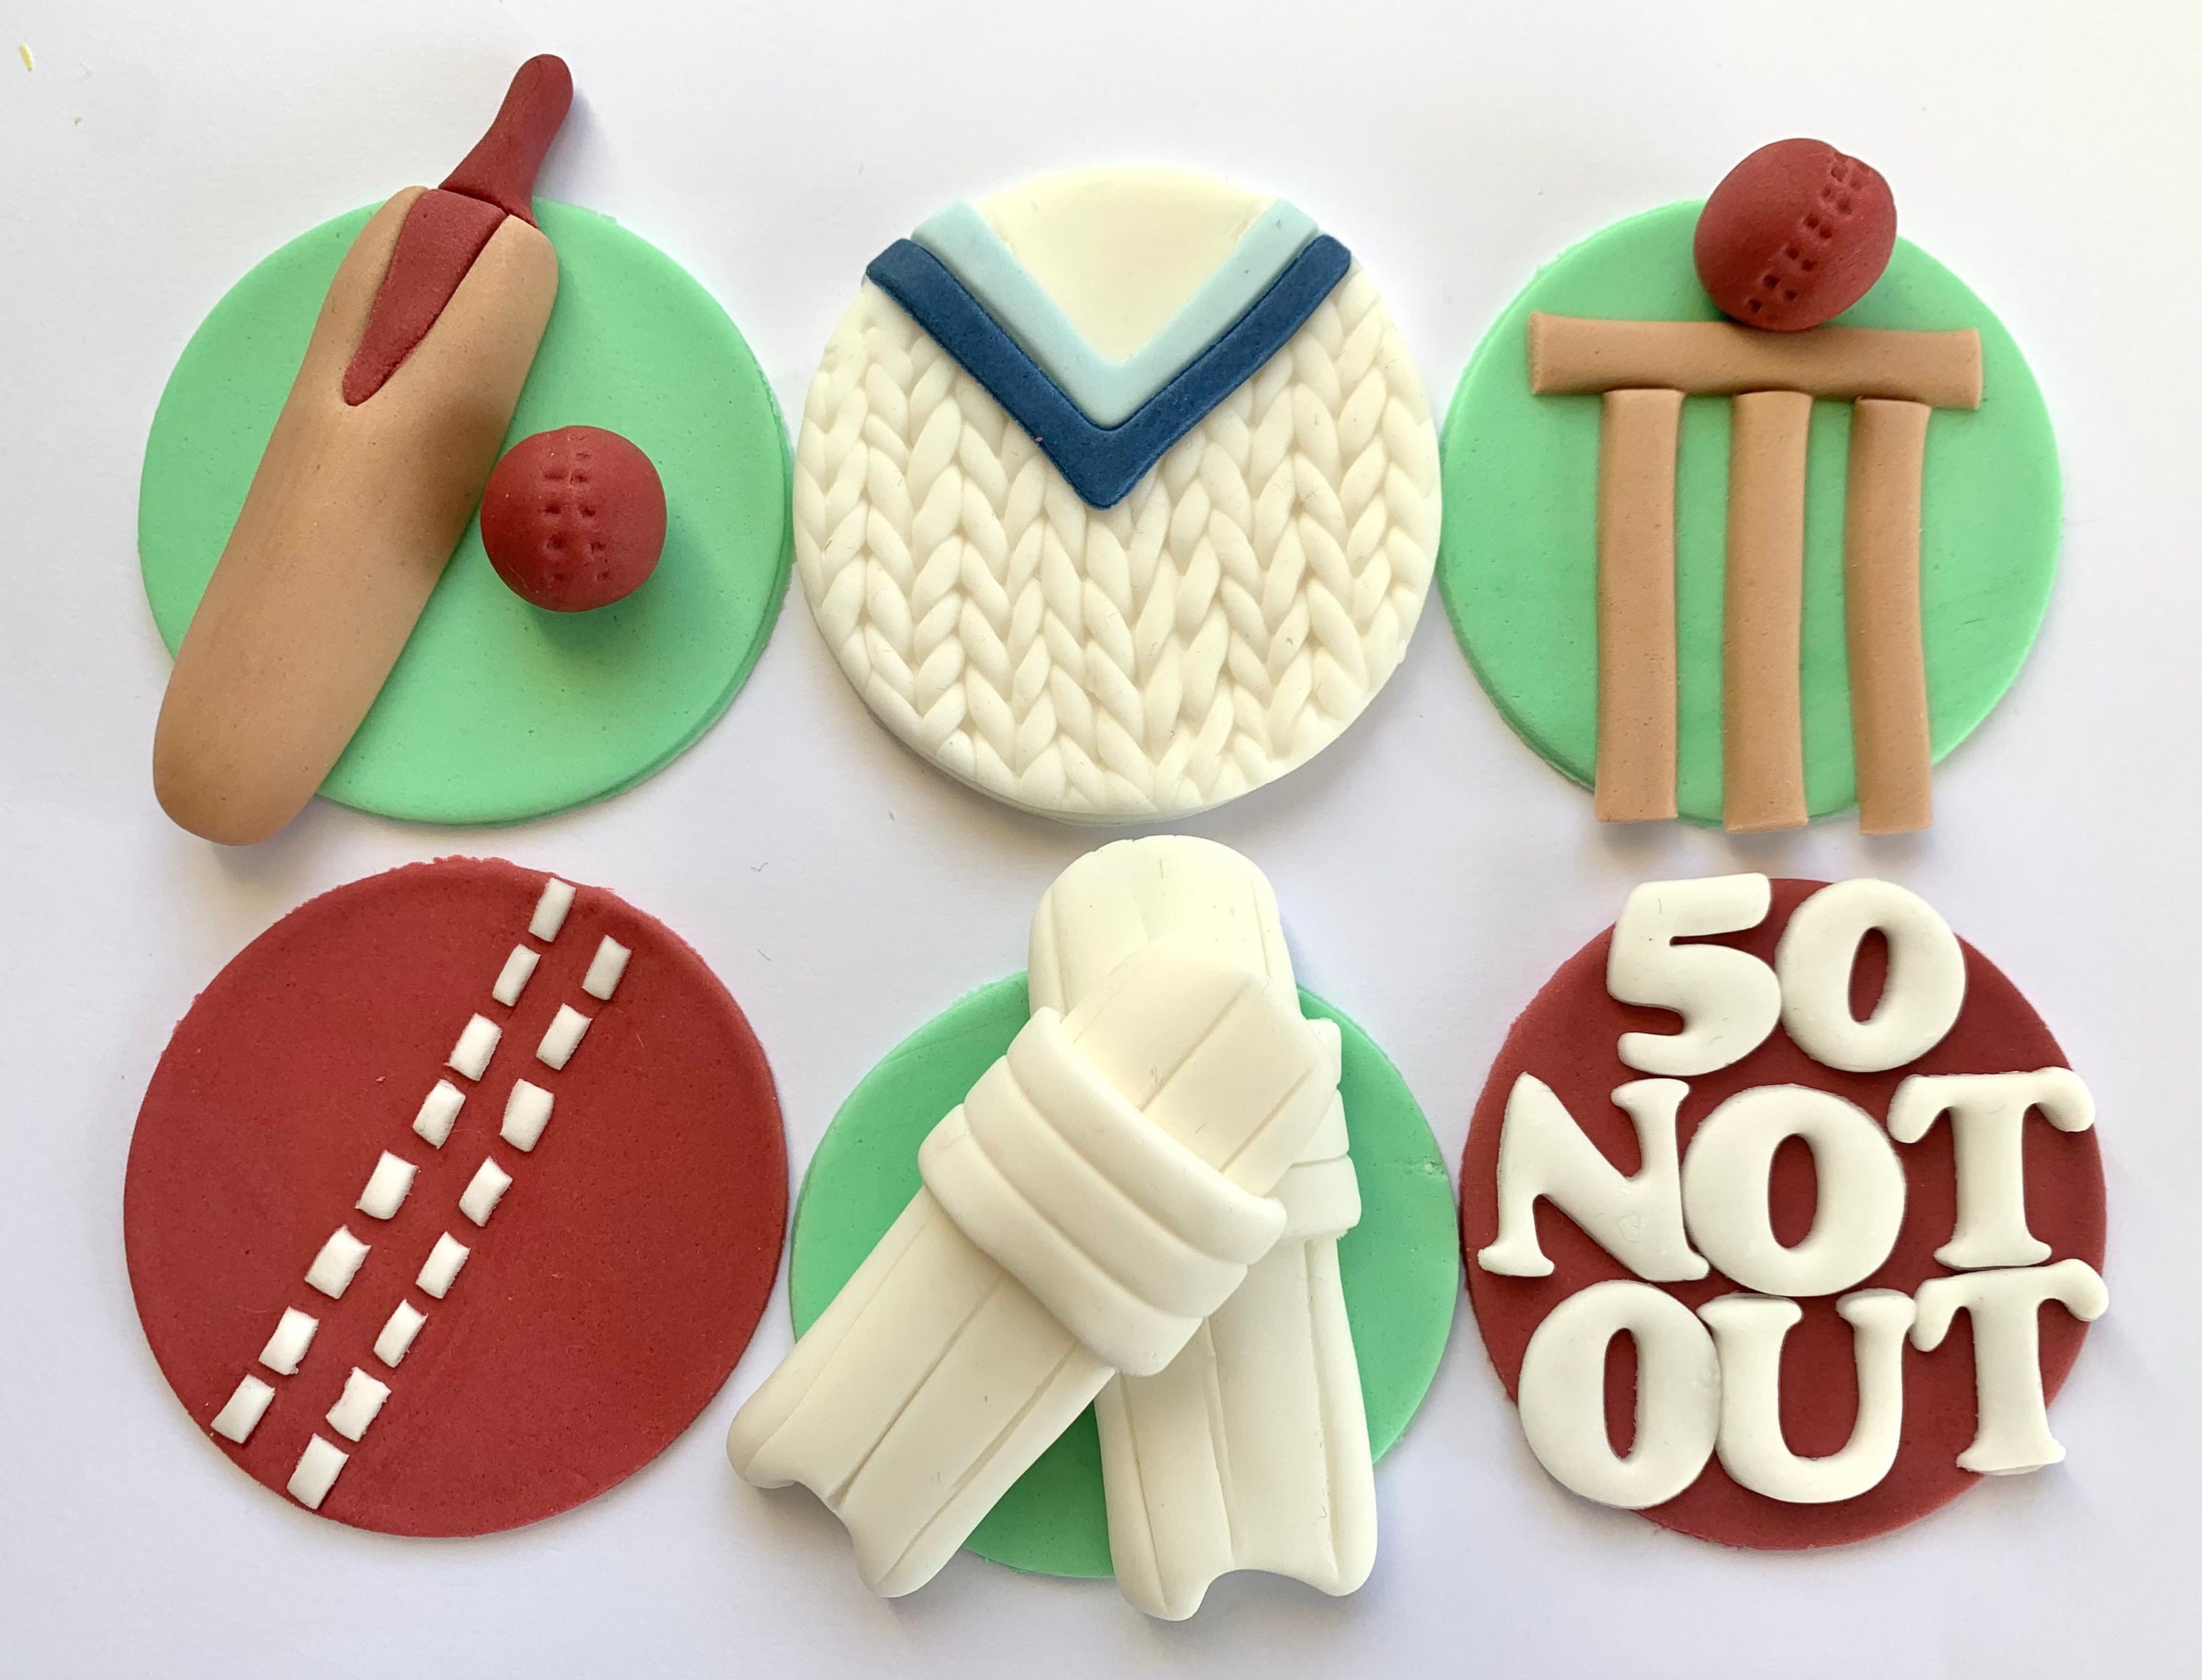 Cake search: cricket bat and ball - CakesDecor